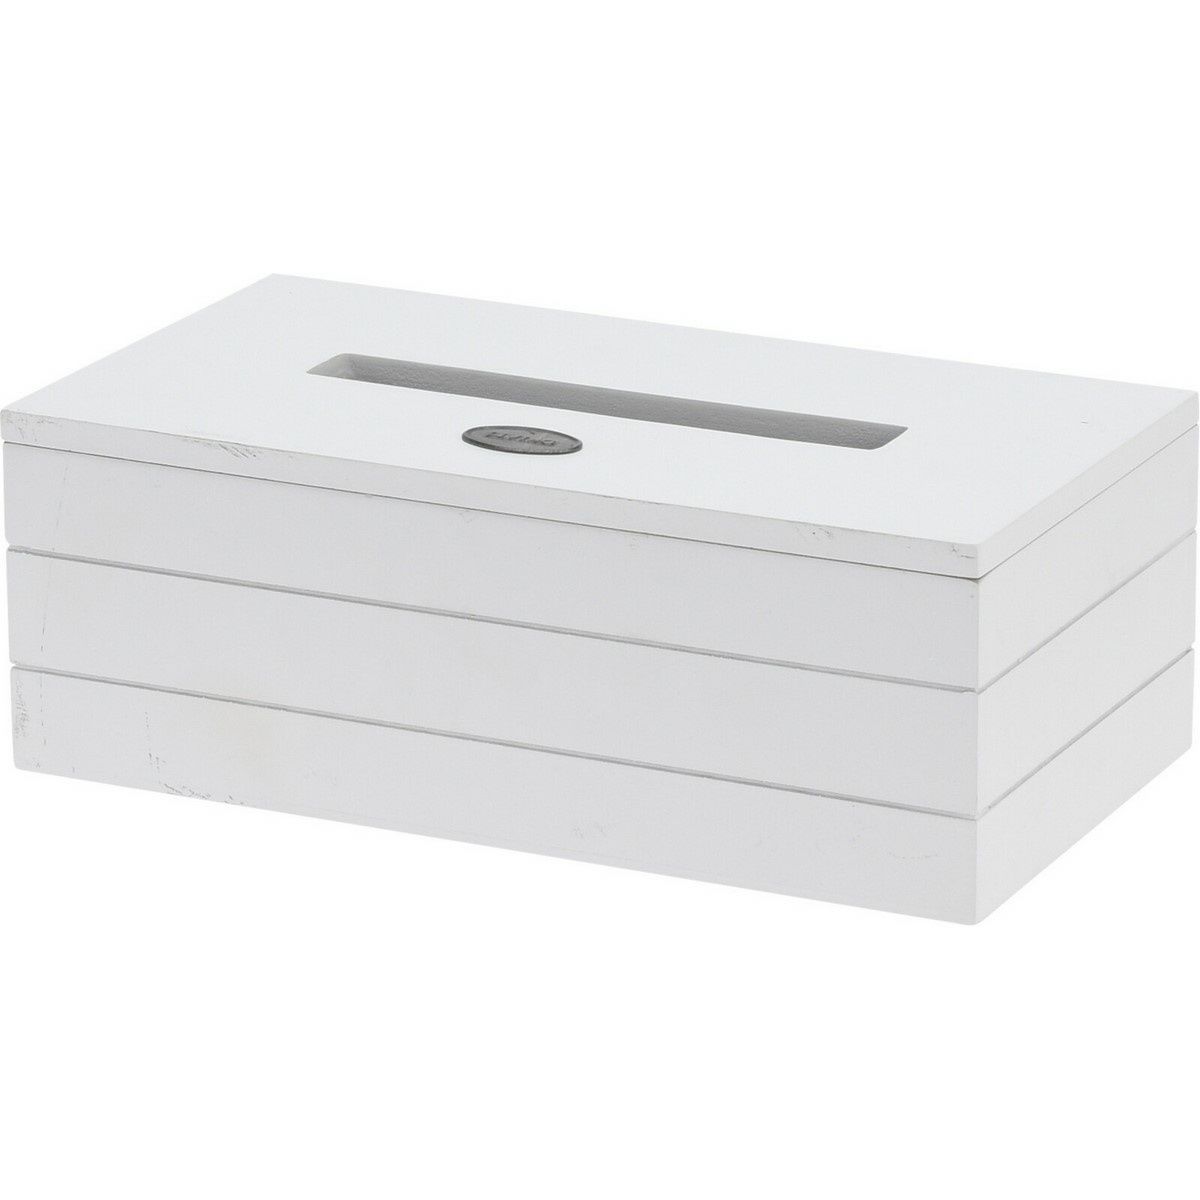 Box na kapesníky Beatty bílá, 25 x 13,5 x 9 cm - 4home.cz